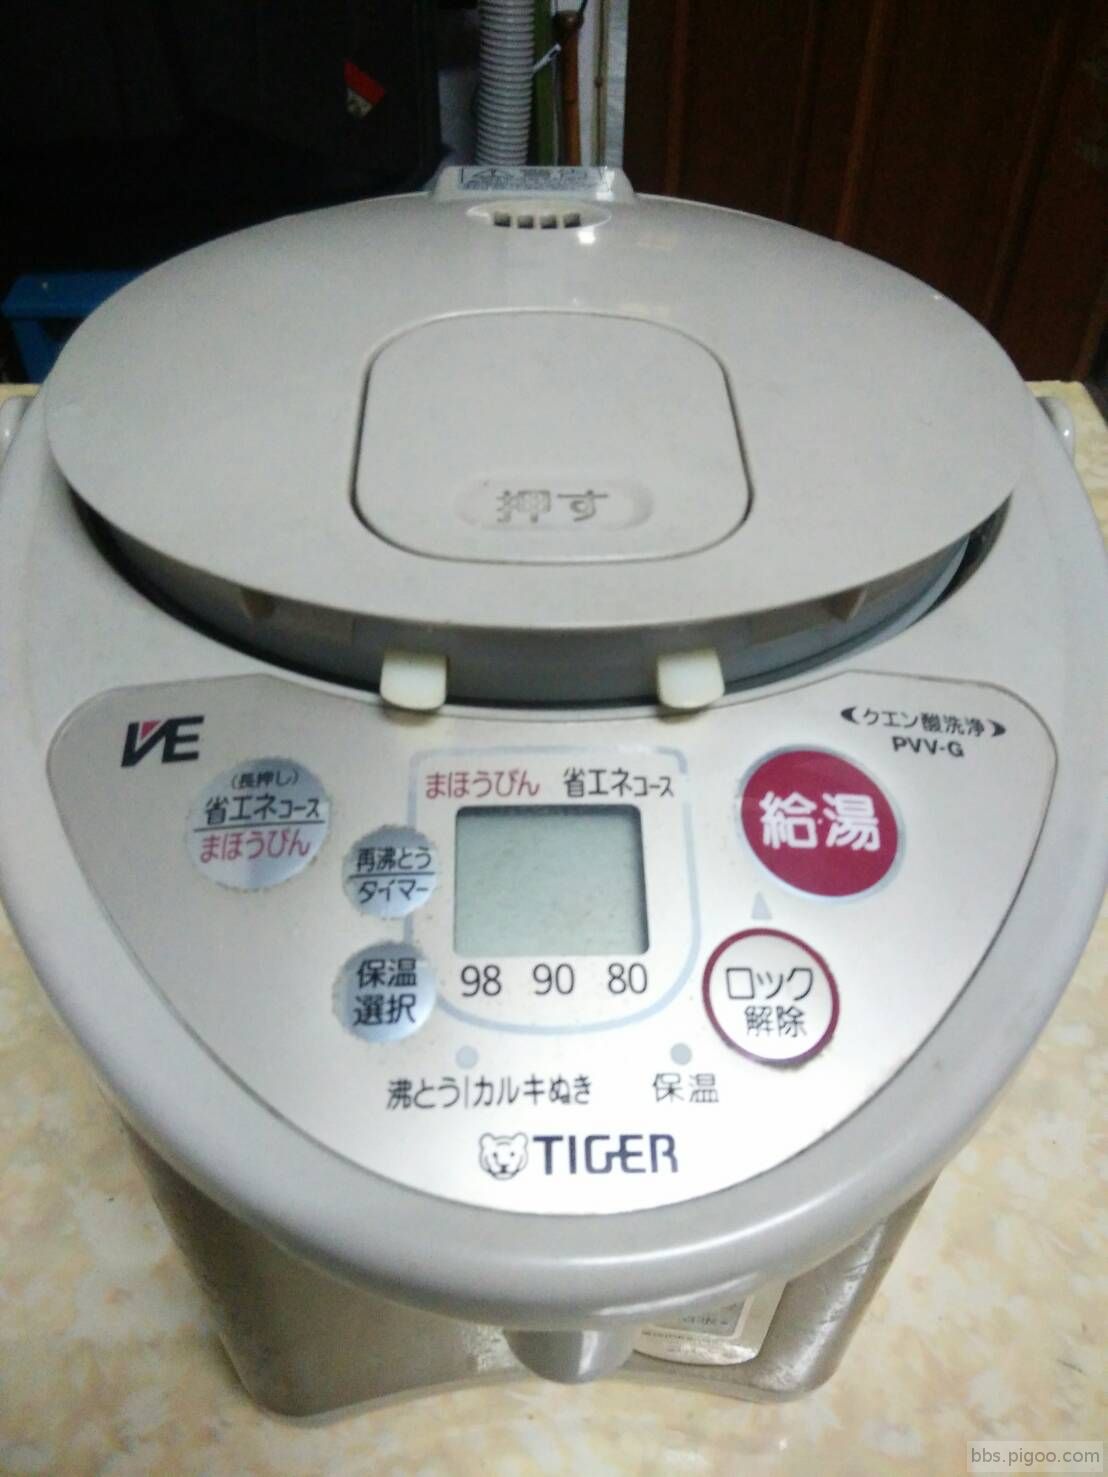 Tiger 001 Top